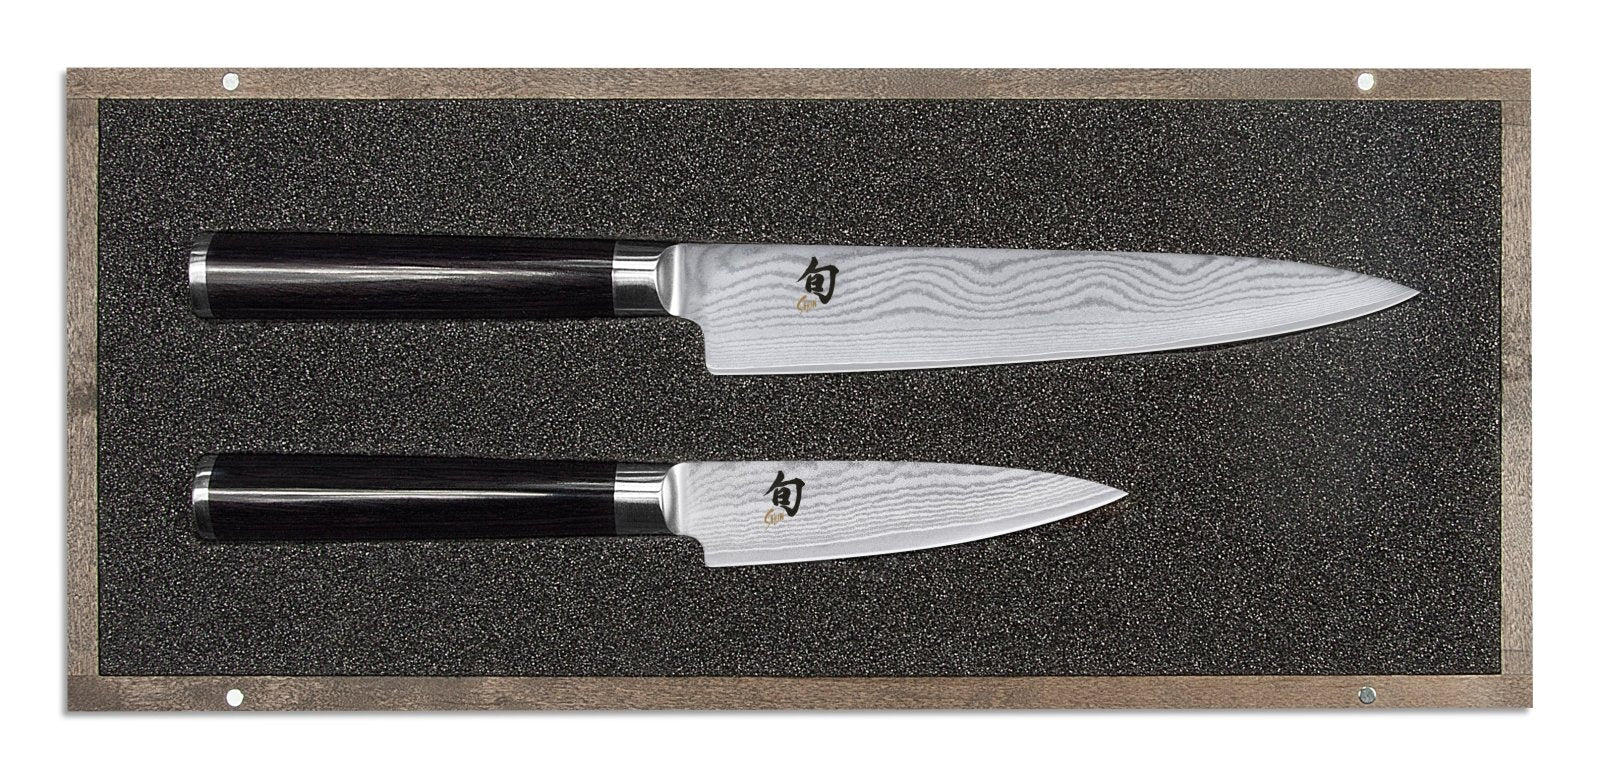 KAI Shun 2 Piece Knife Set - Utility Knife & Paring Knife - KAI-DMS-210 - The Cotswold Knife Company